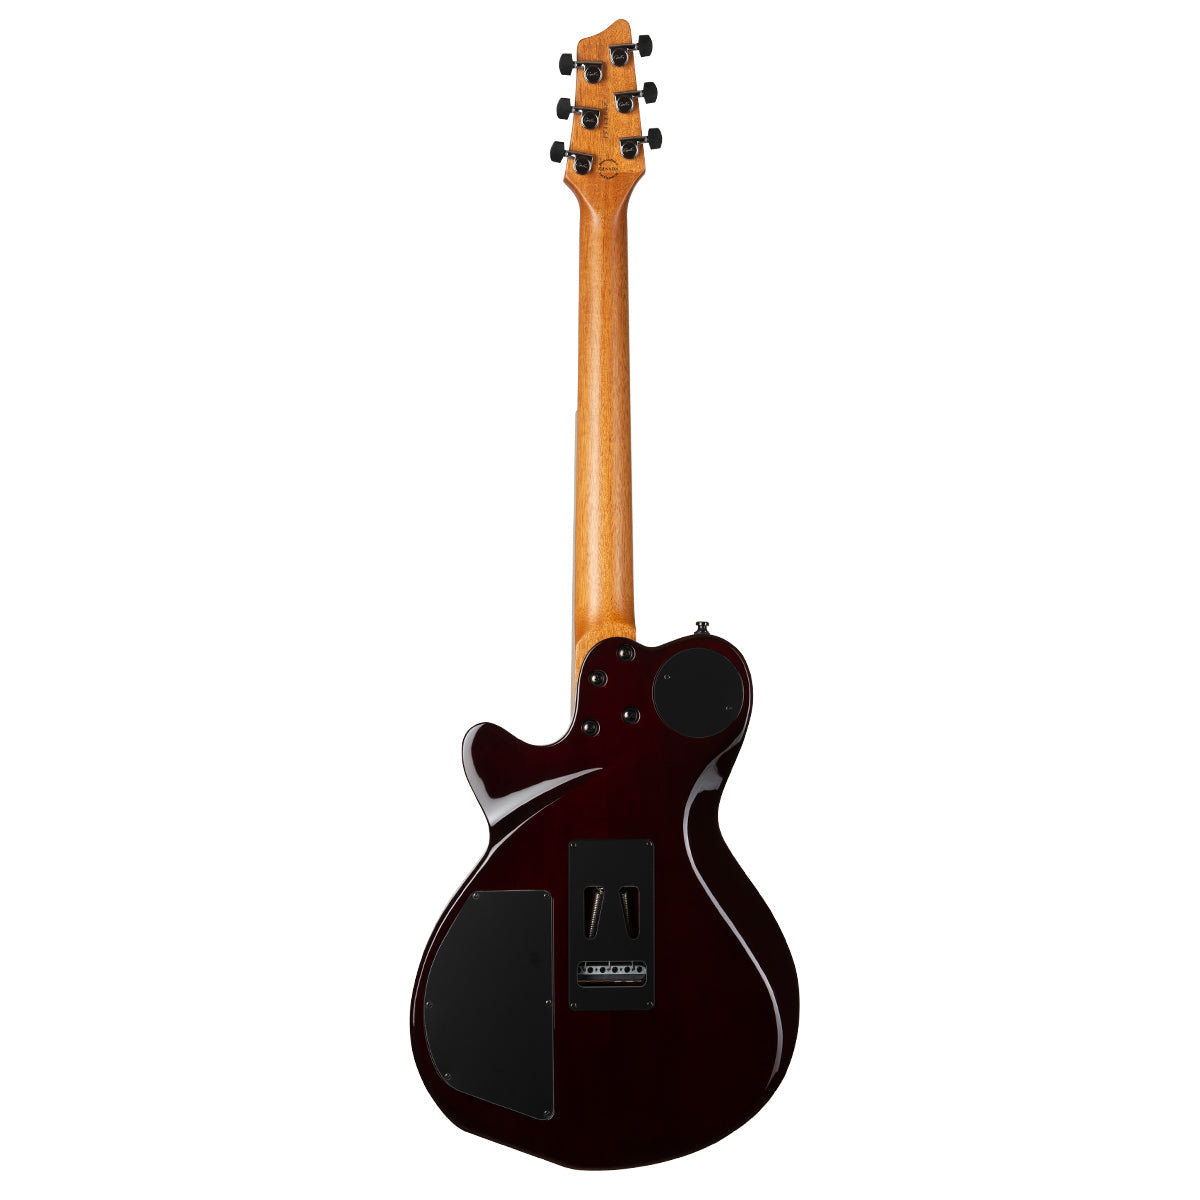 Godin XTSA 3 Voice Electric Guitar ~ Light Burst Flame, Electric Guitar for sale at Richards Guitars.